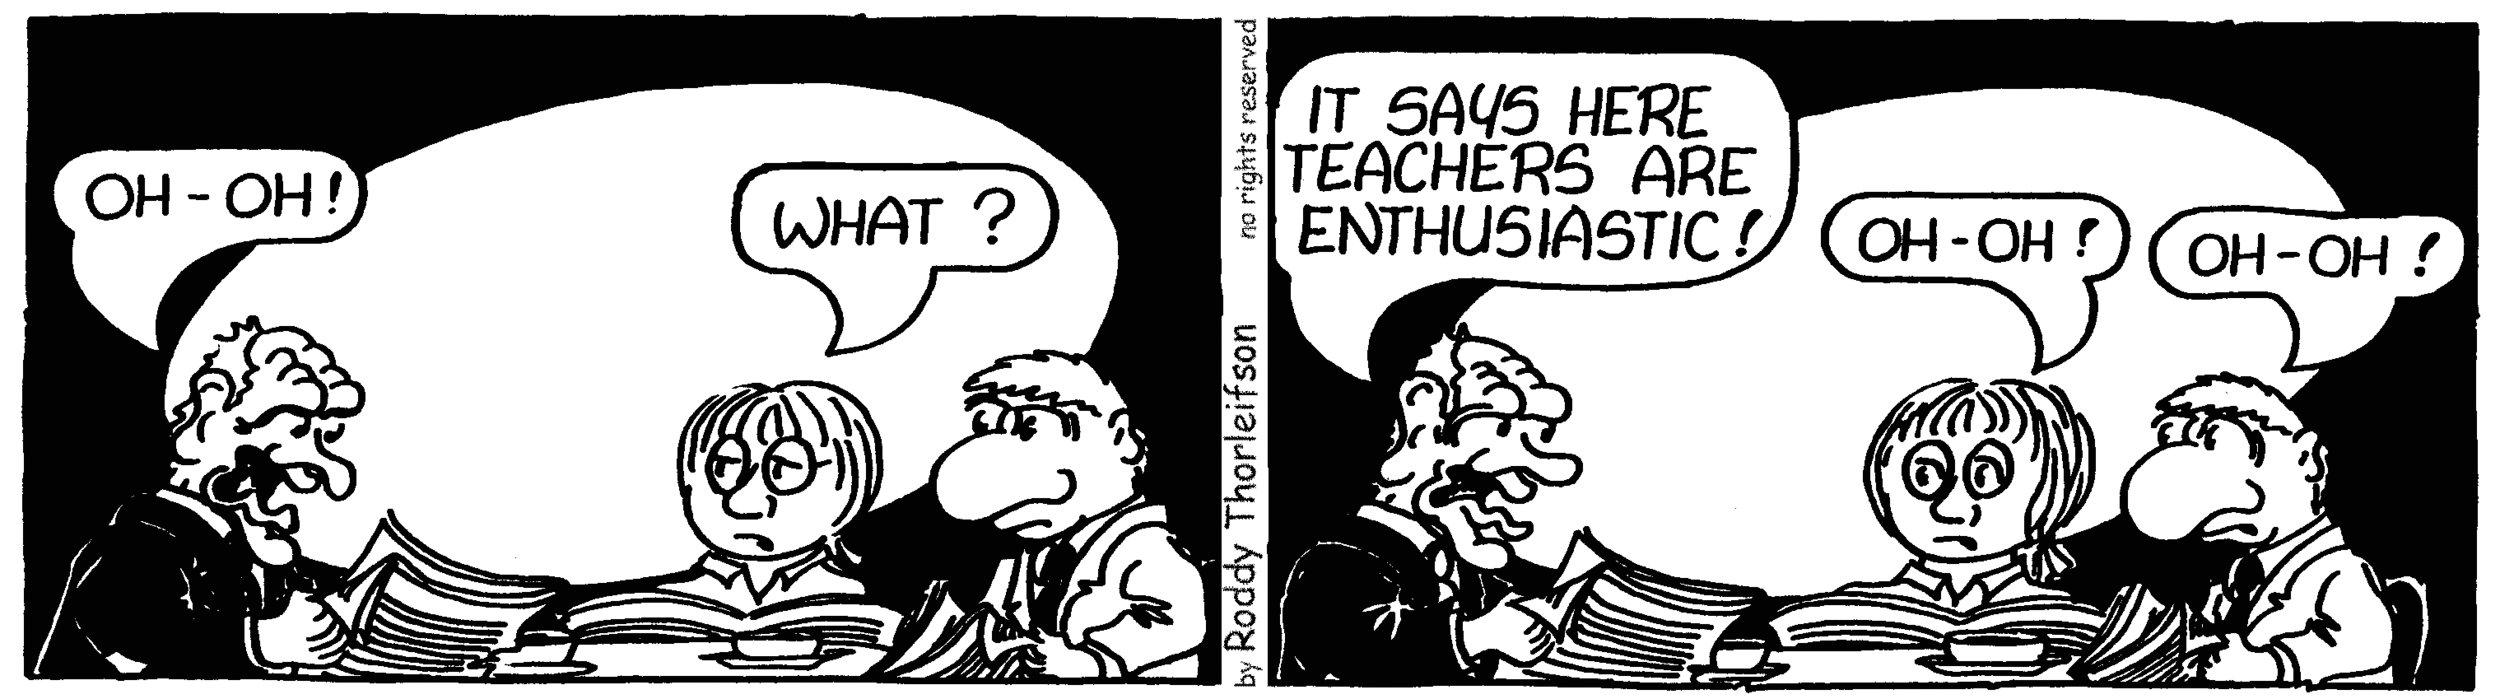 free cartoon education educating teaching enthusiastic teachers